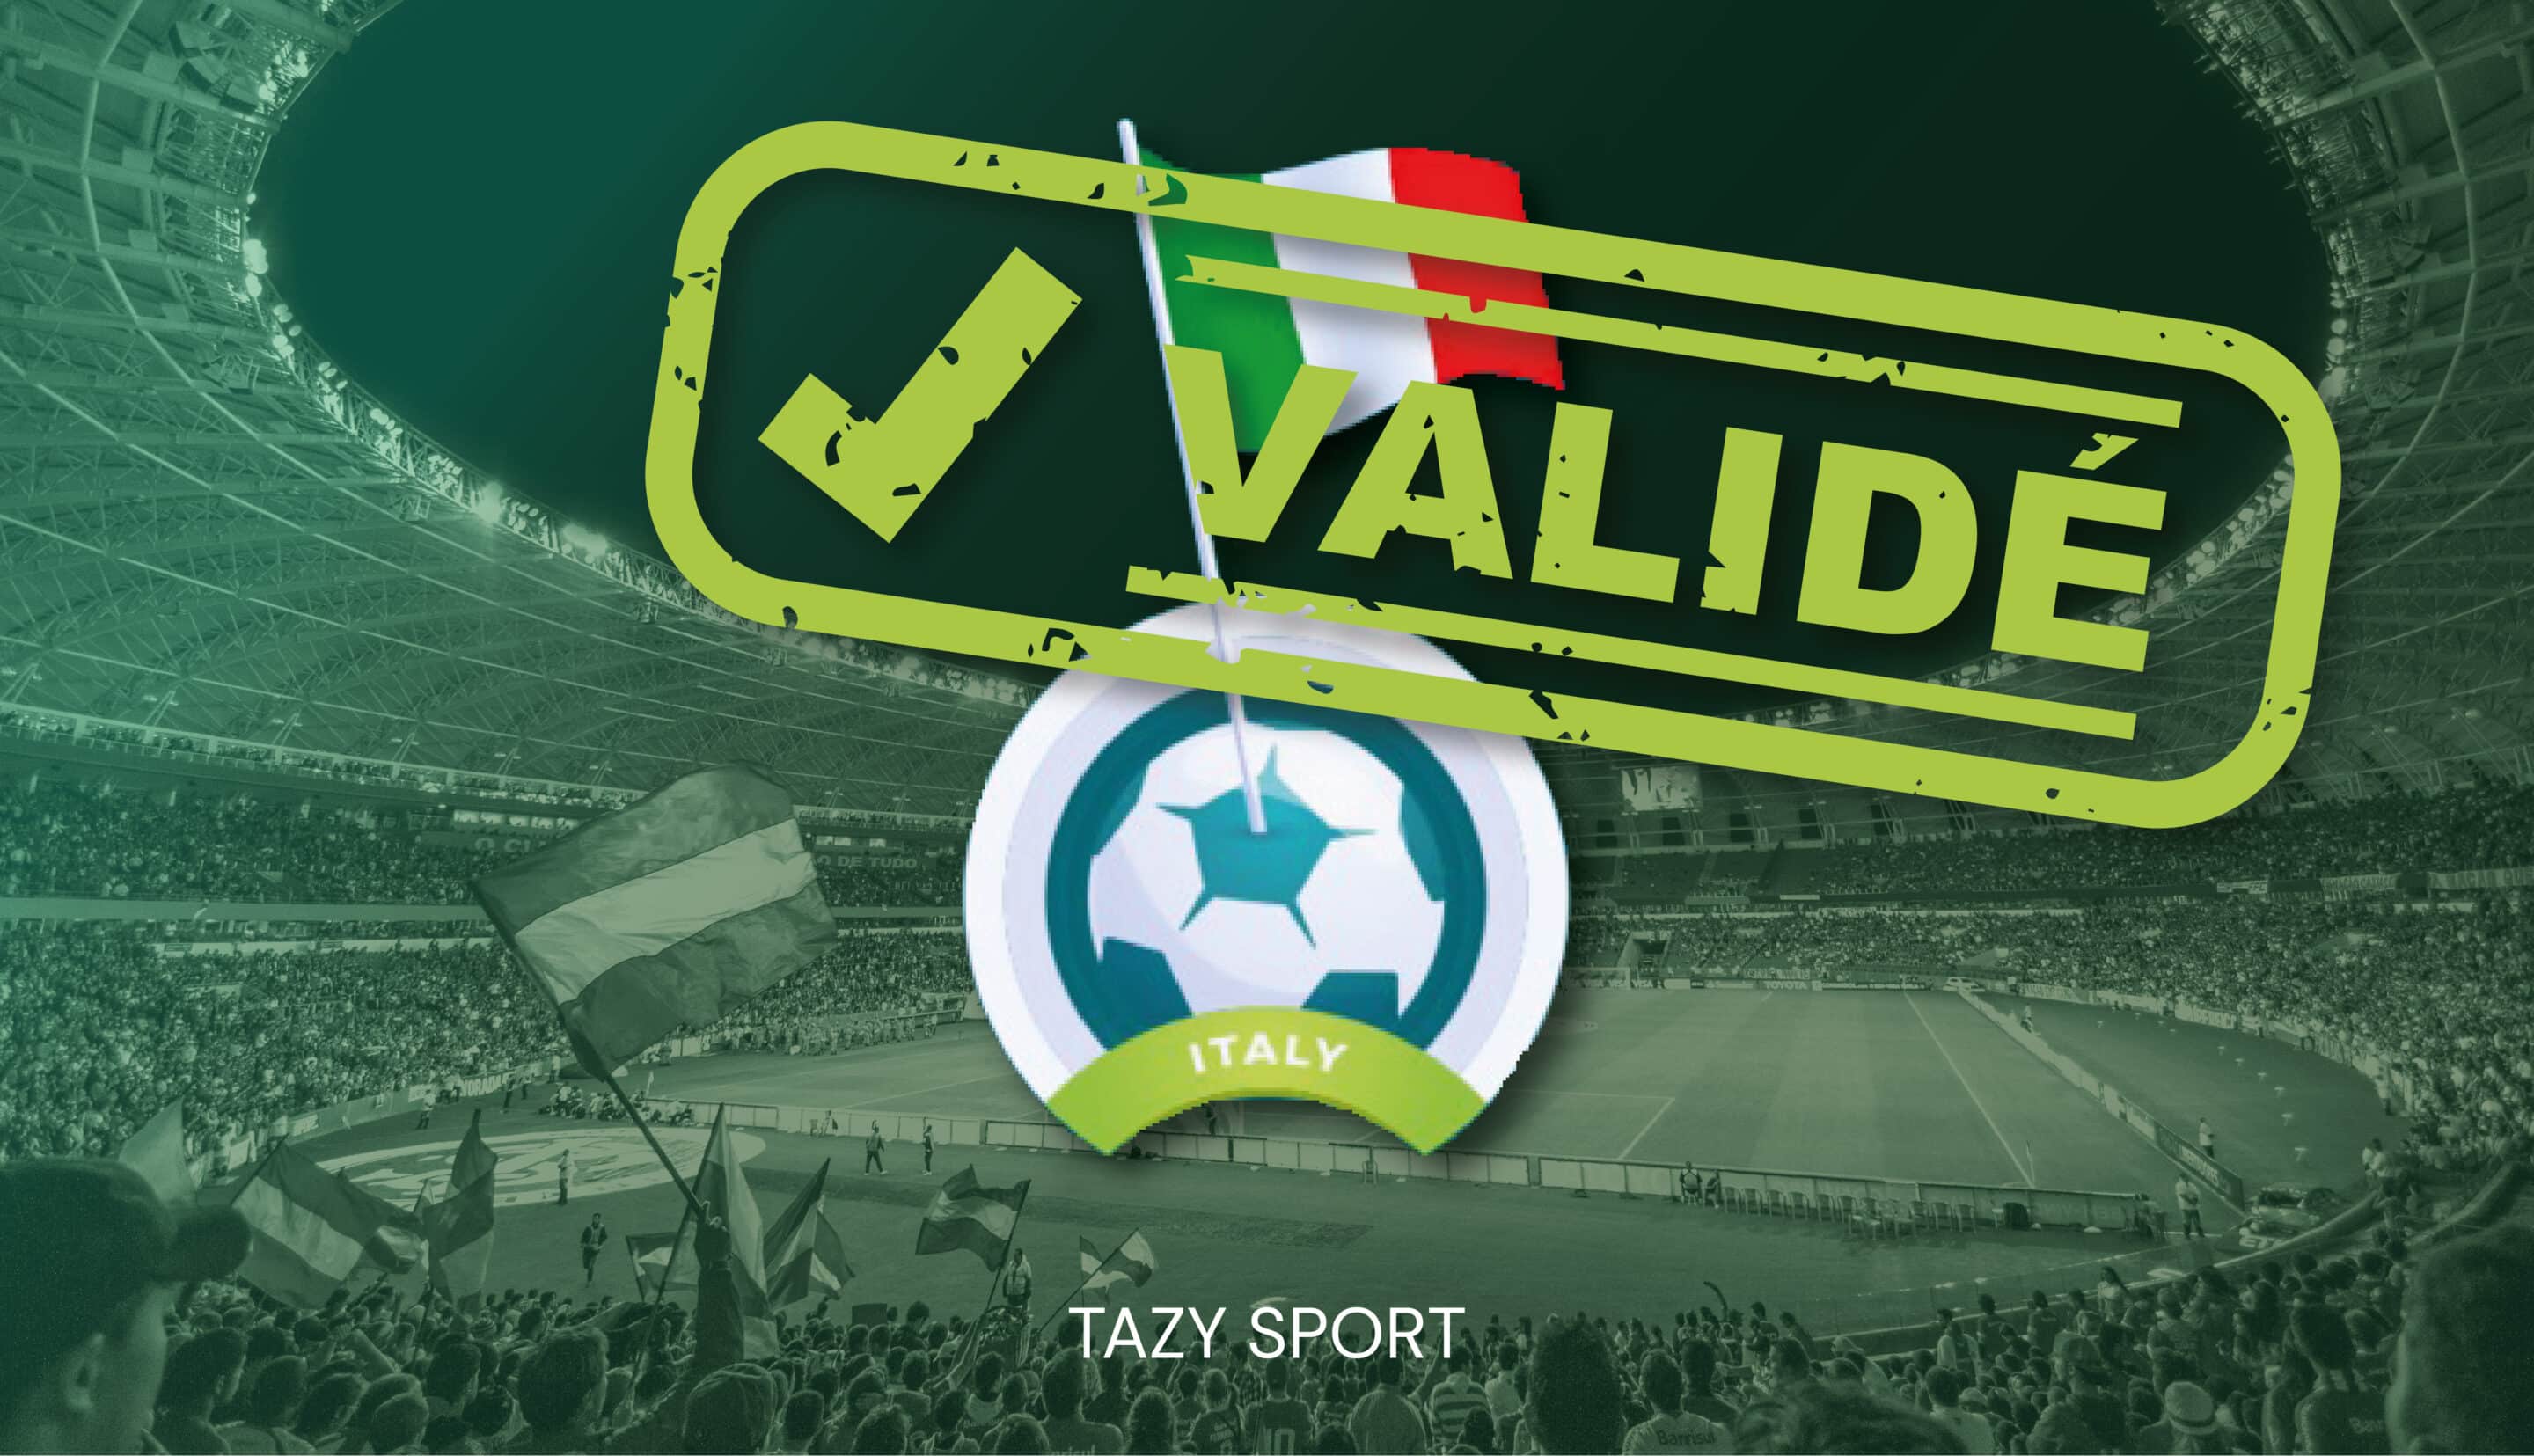 Pronostic validé de football en Italie - Tazy Sport